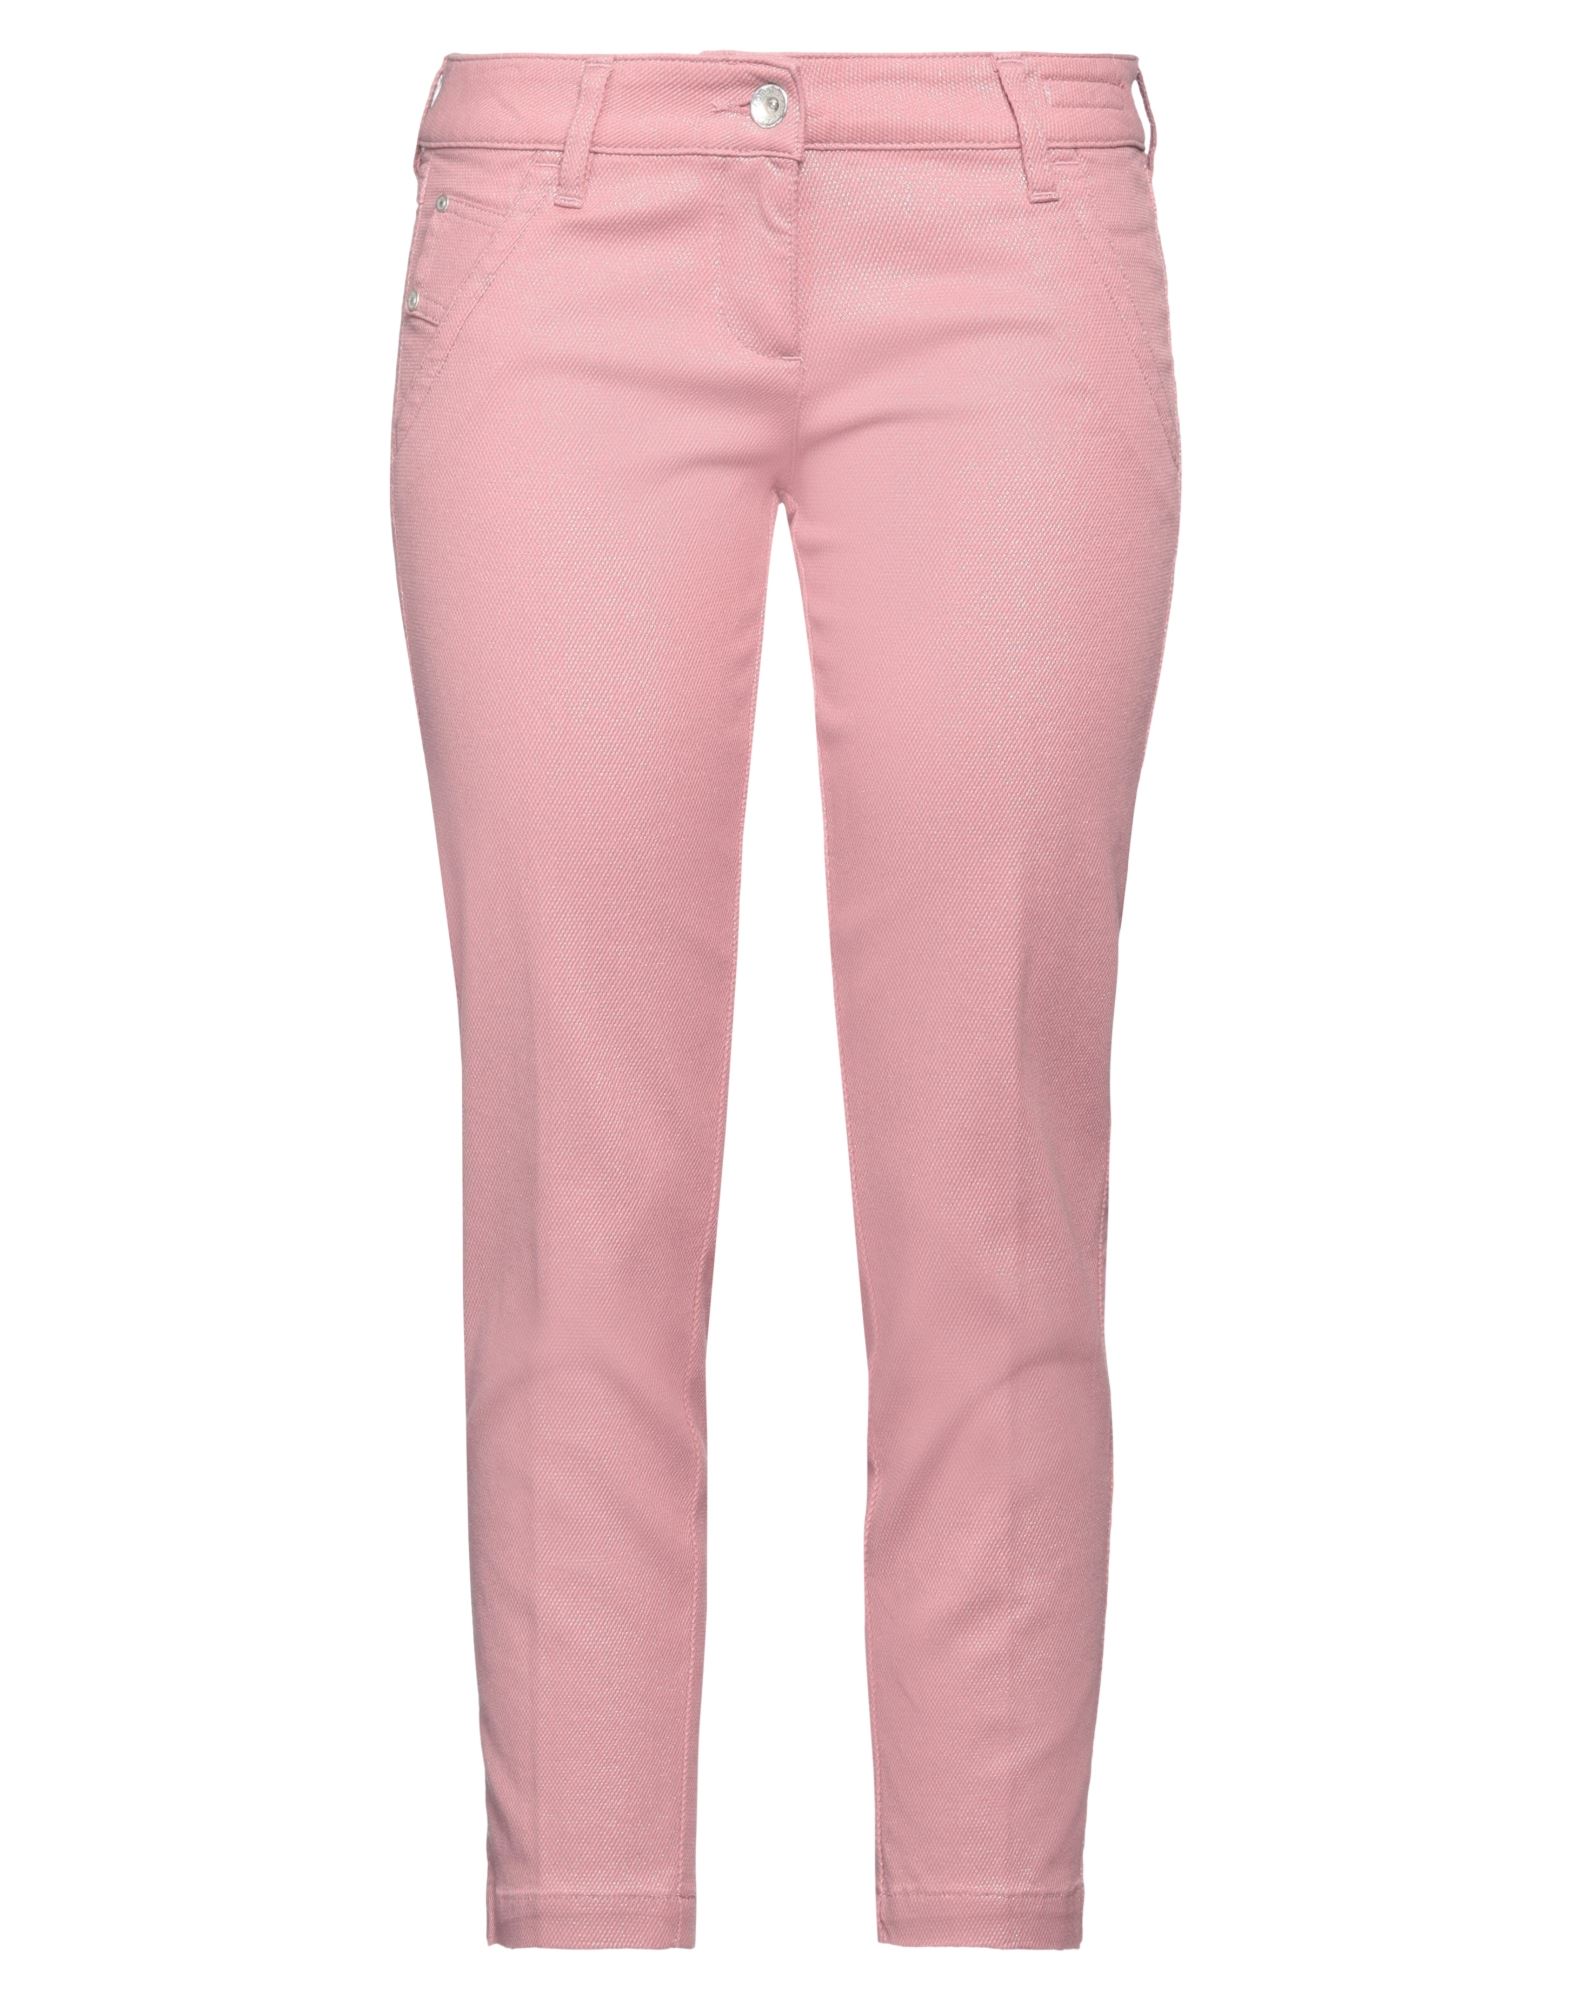 Jacob Cohёn Woman Pants Sky Blue Size 27 Cotton, Linen, Elastane In Pink